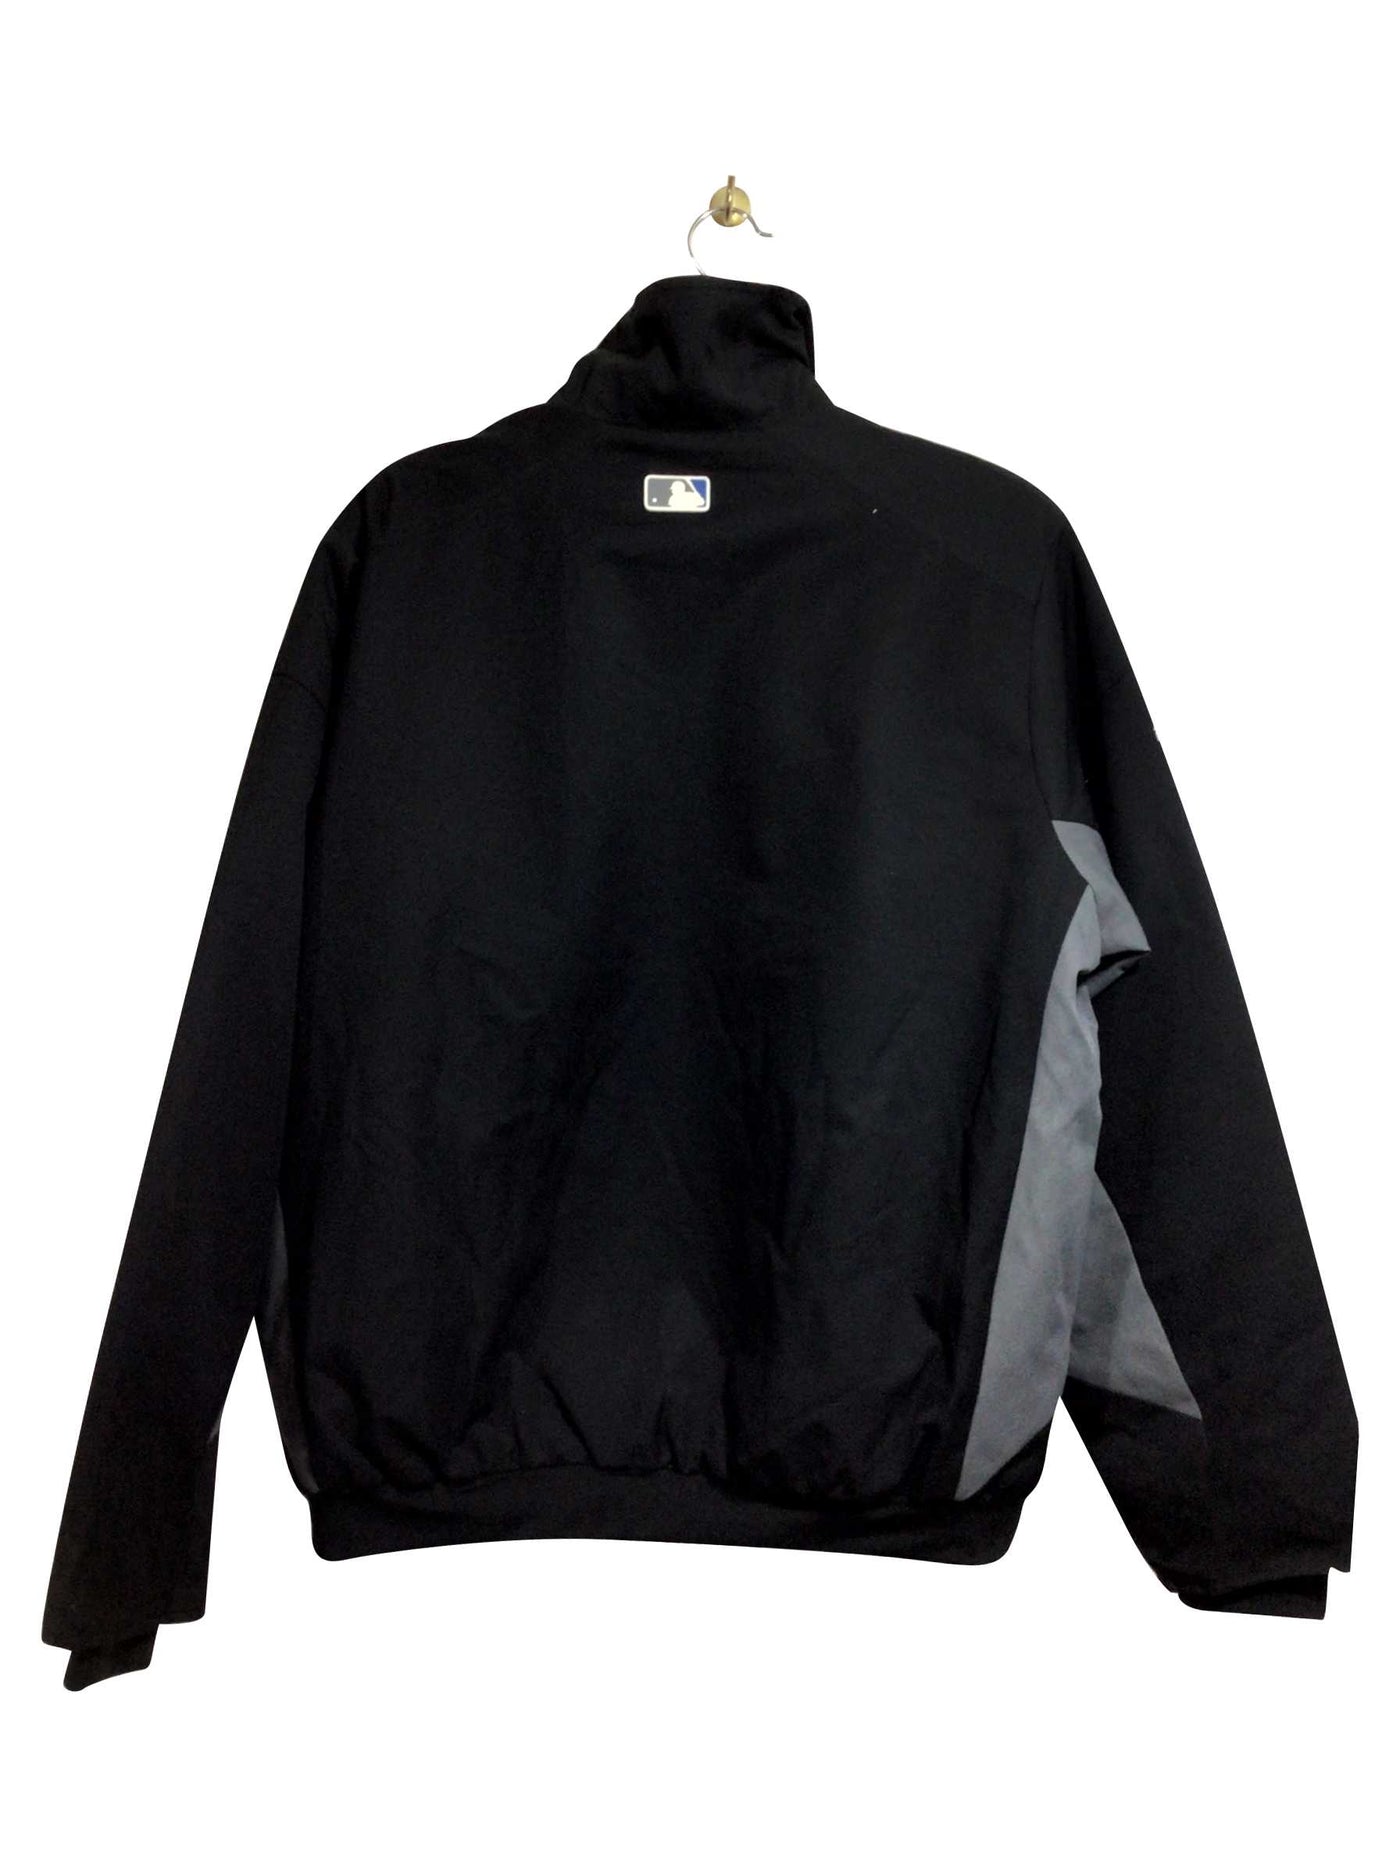 MAJESTIC Regular fit Coat in Black - Size M | 15 $ KOOP